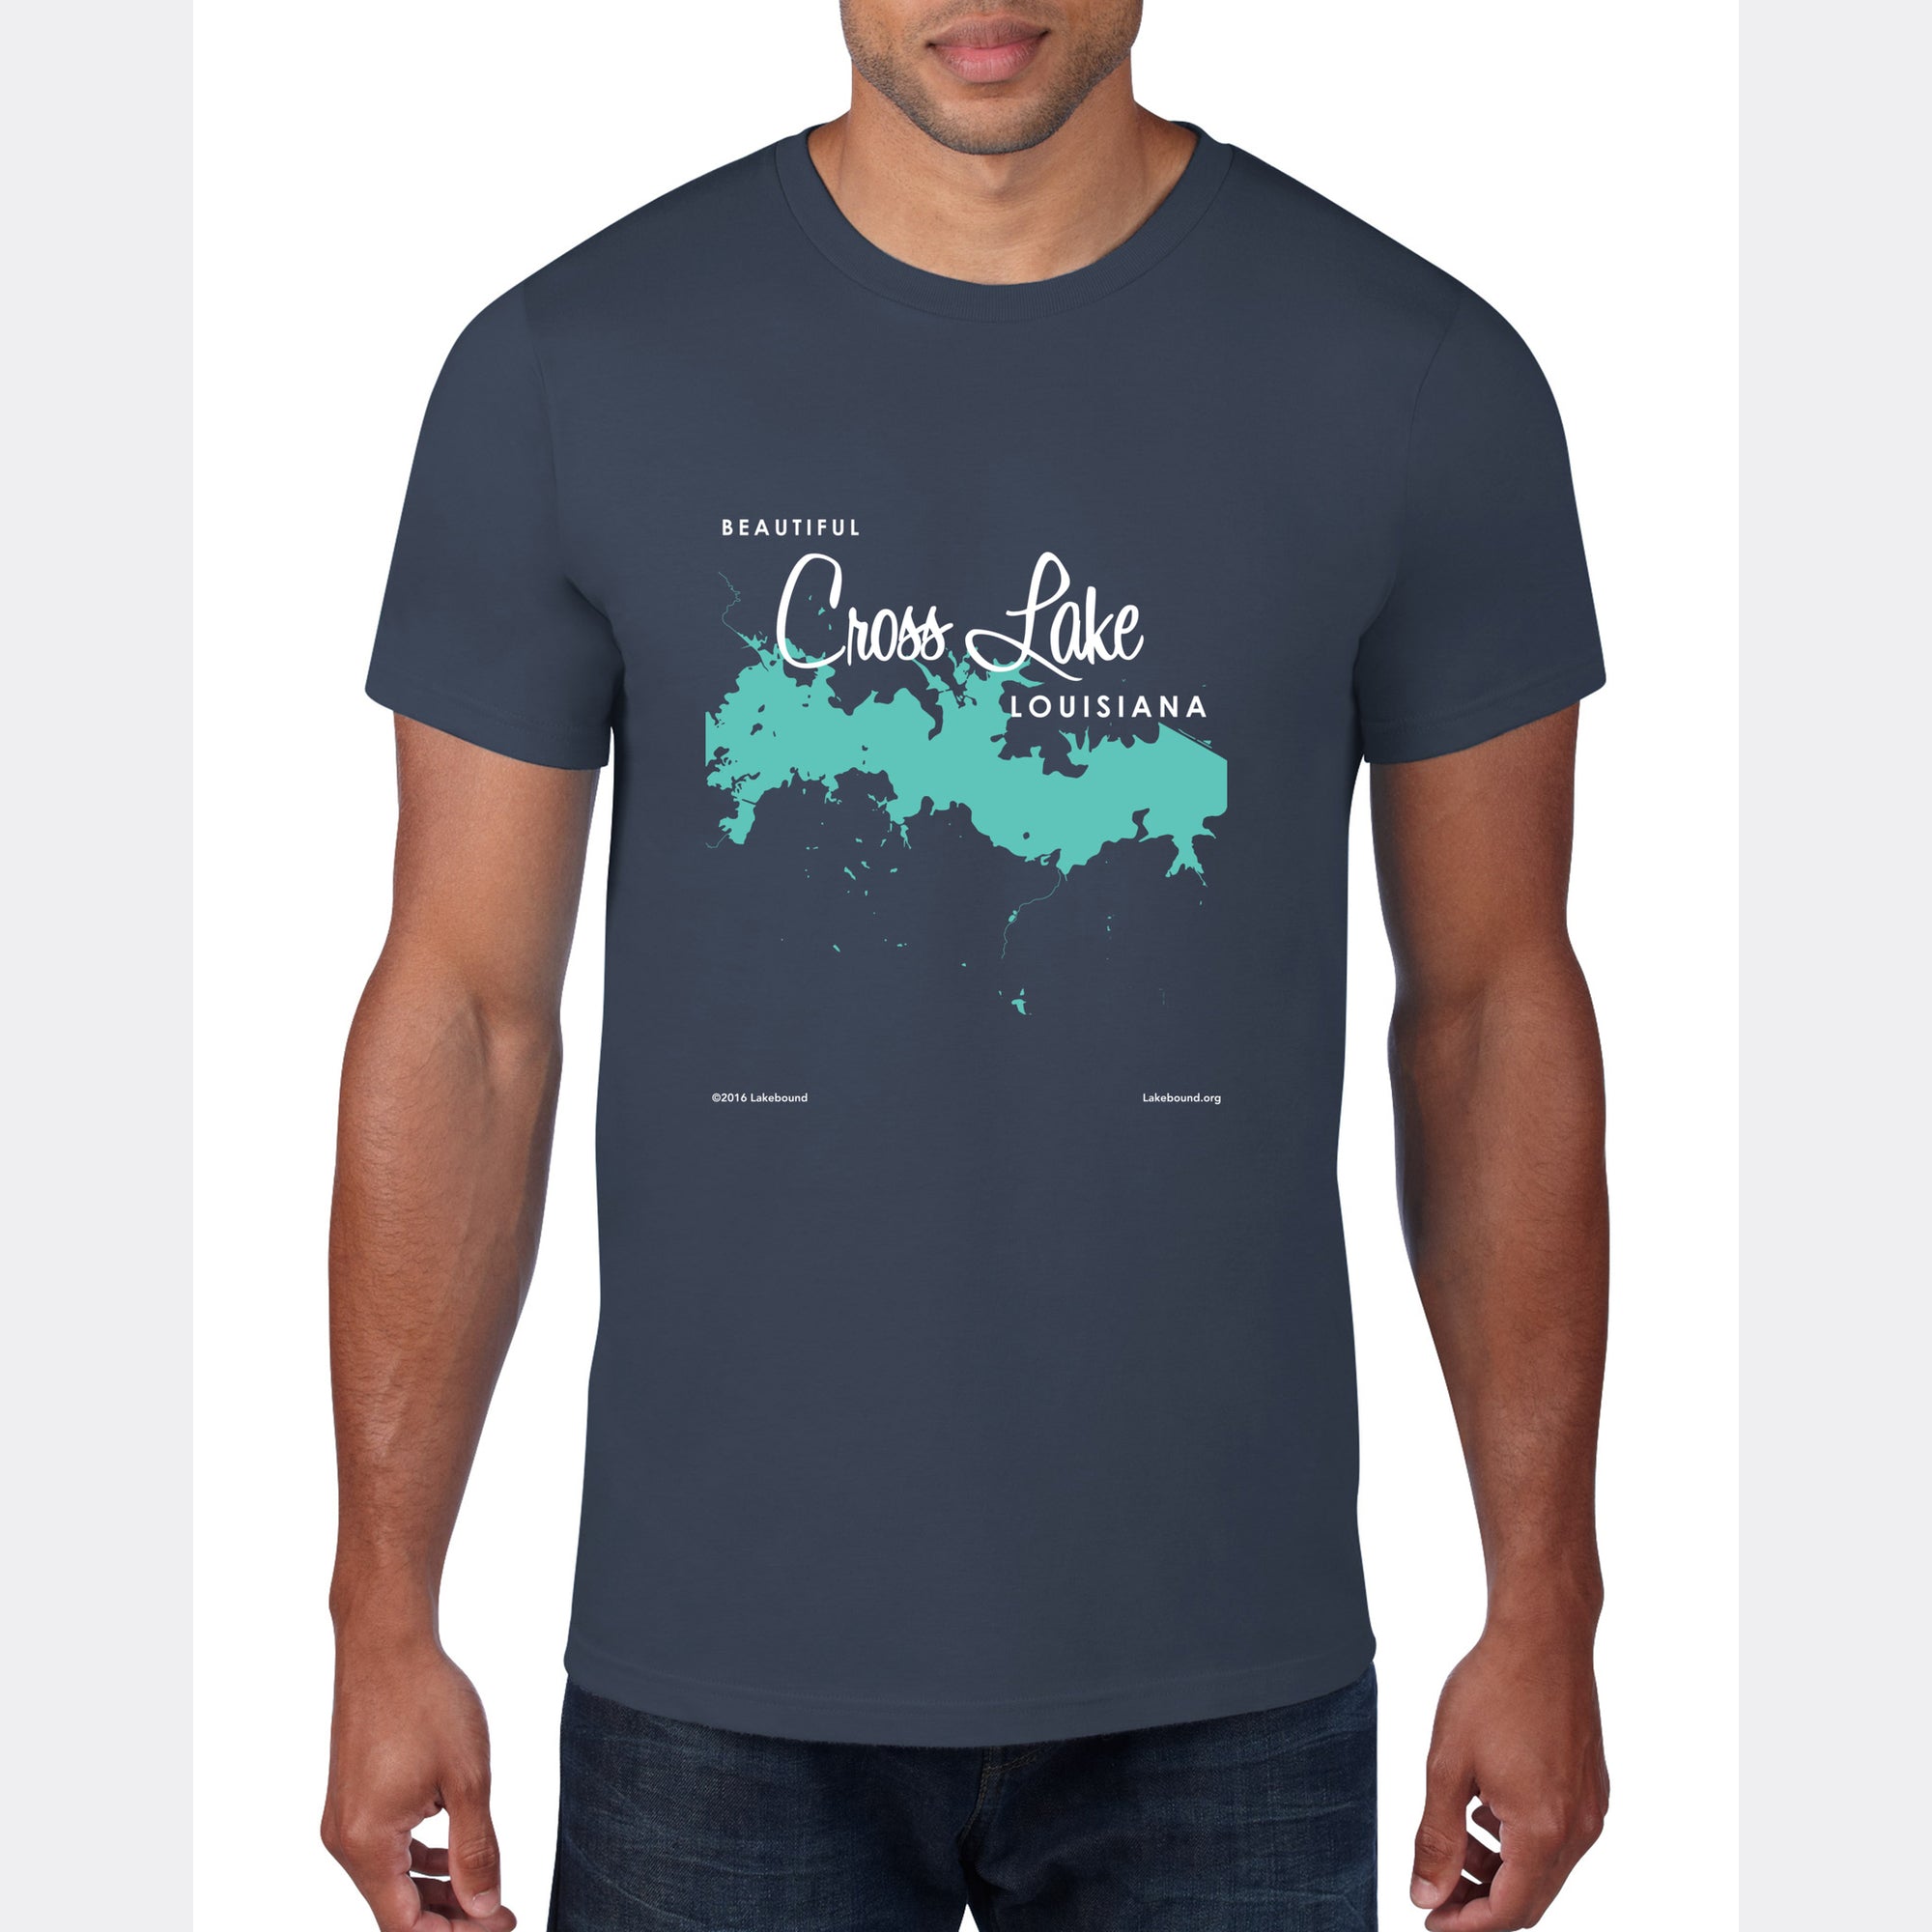 Cross Lake Louisiana, T-Shirt